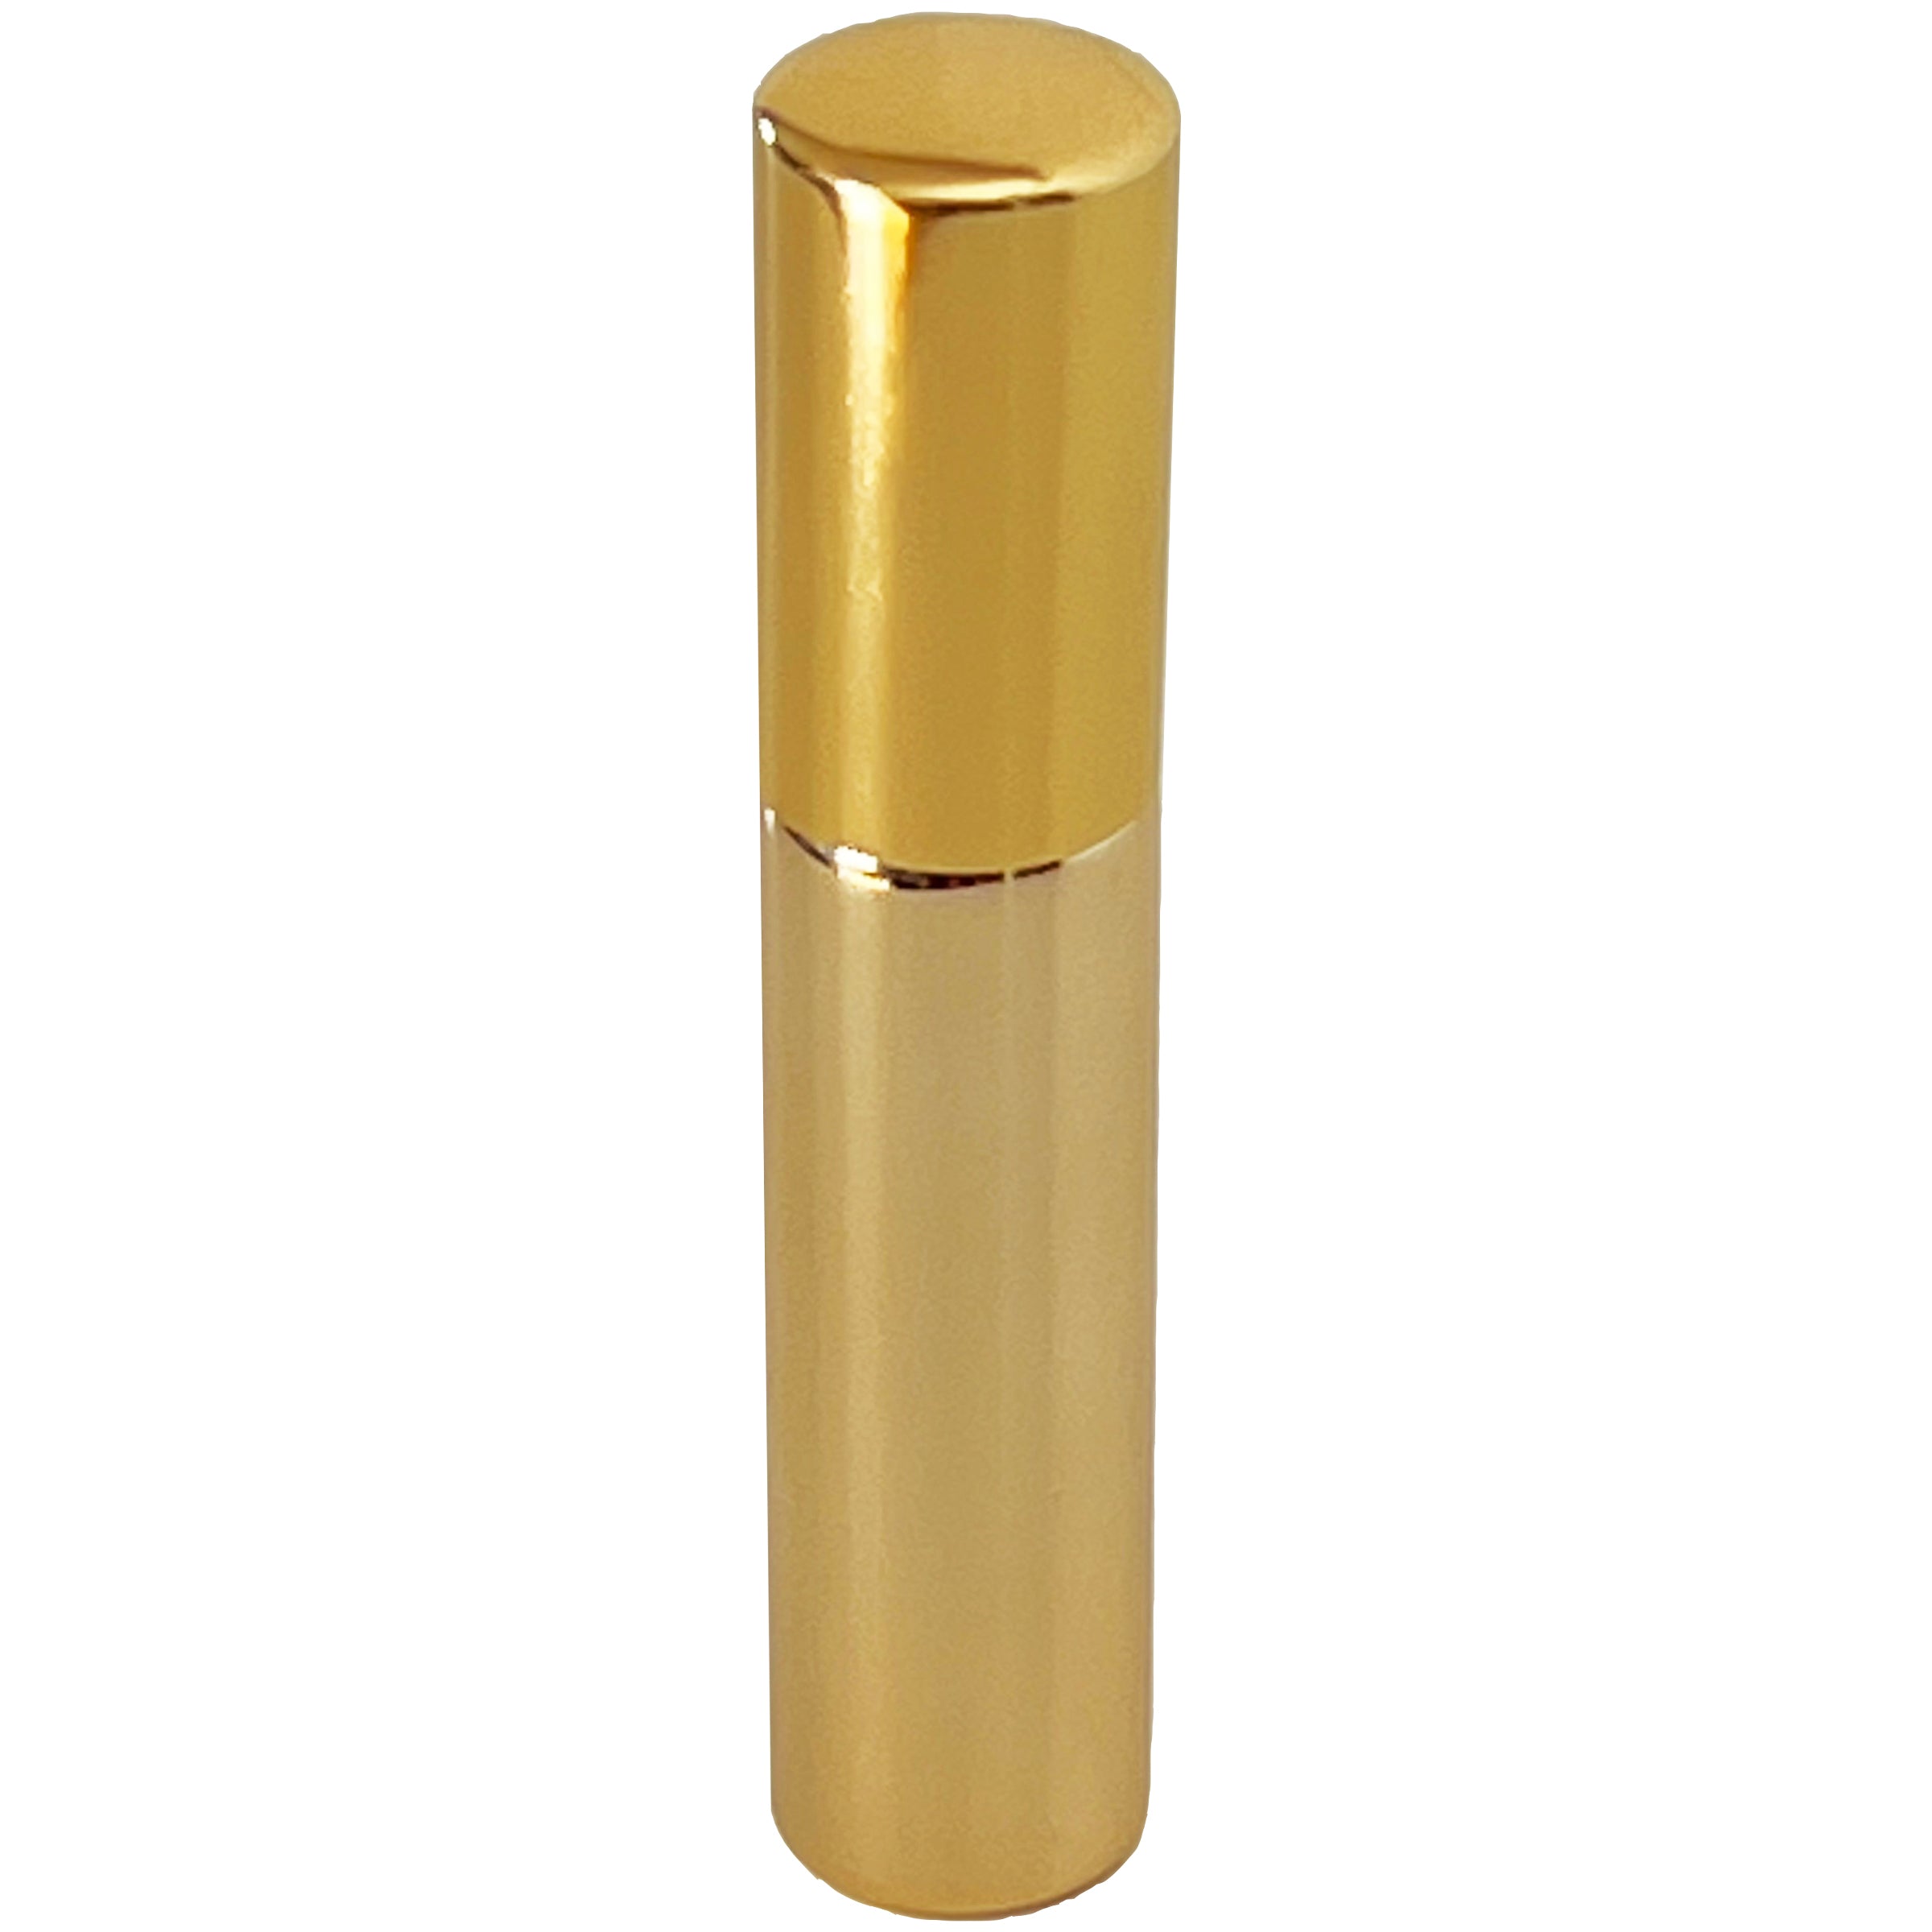 10ml 0.33oz Gold UV Electroplated Glass Spray Bottles